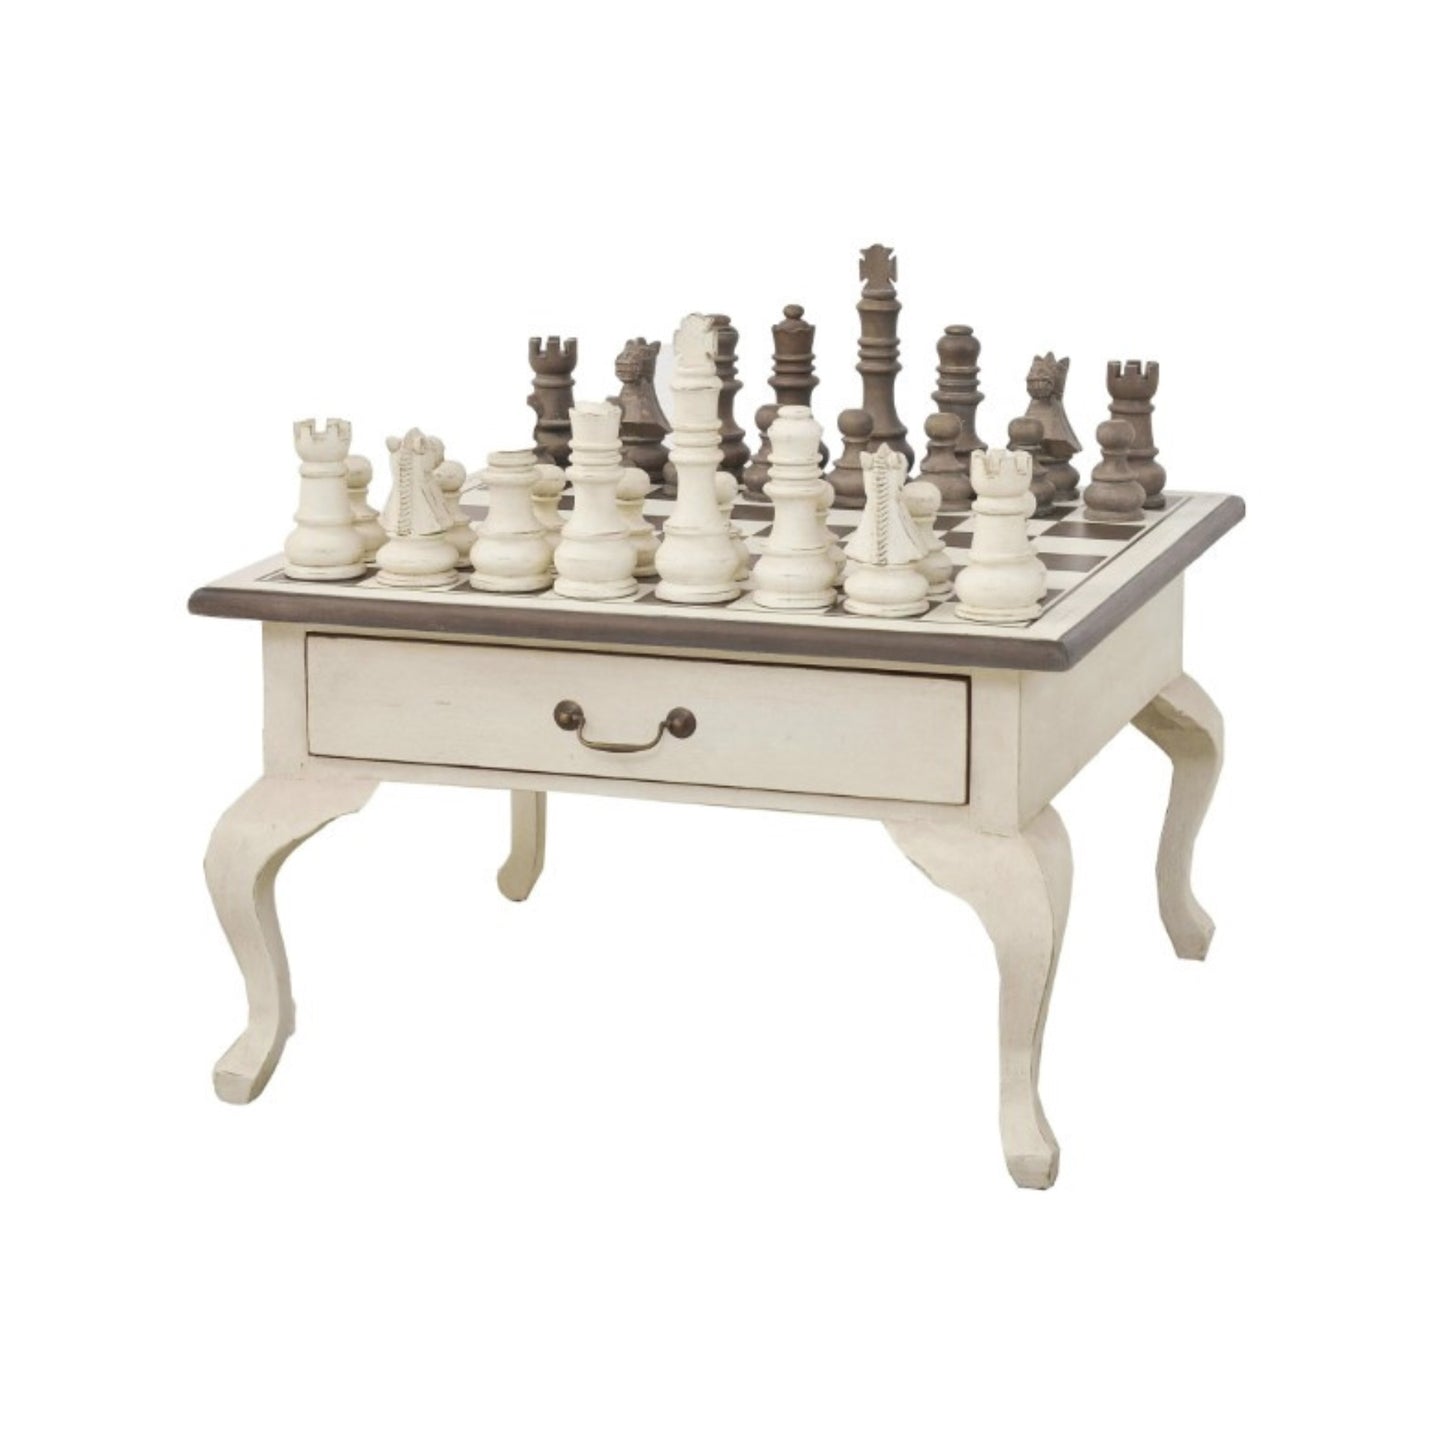 Gentleman's Chess Table 2 Drawer w/ Chess Set